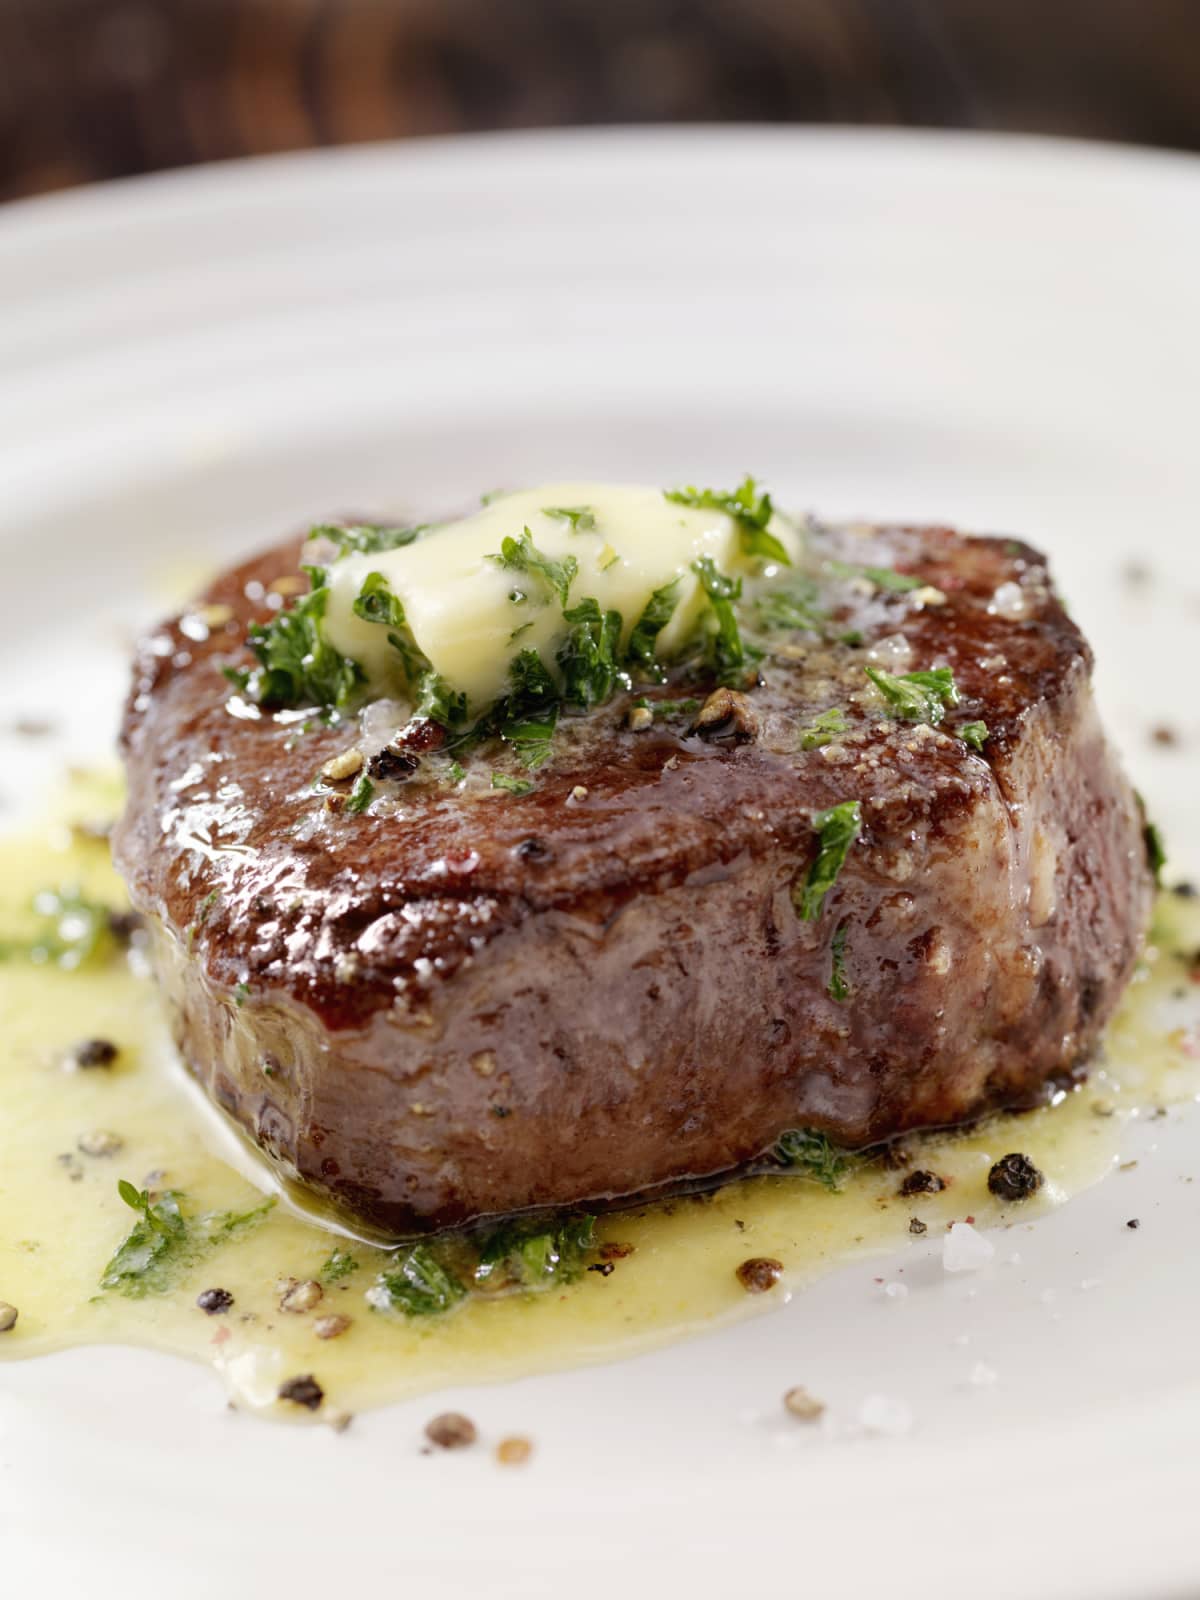 Medium rare fillet mignon steak with herb garlic butter on white plate